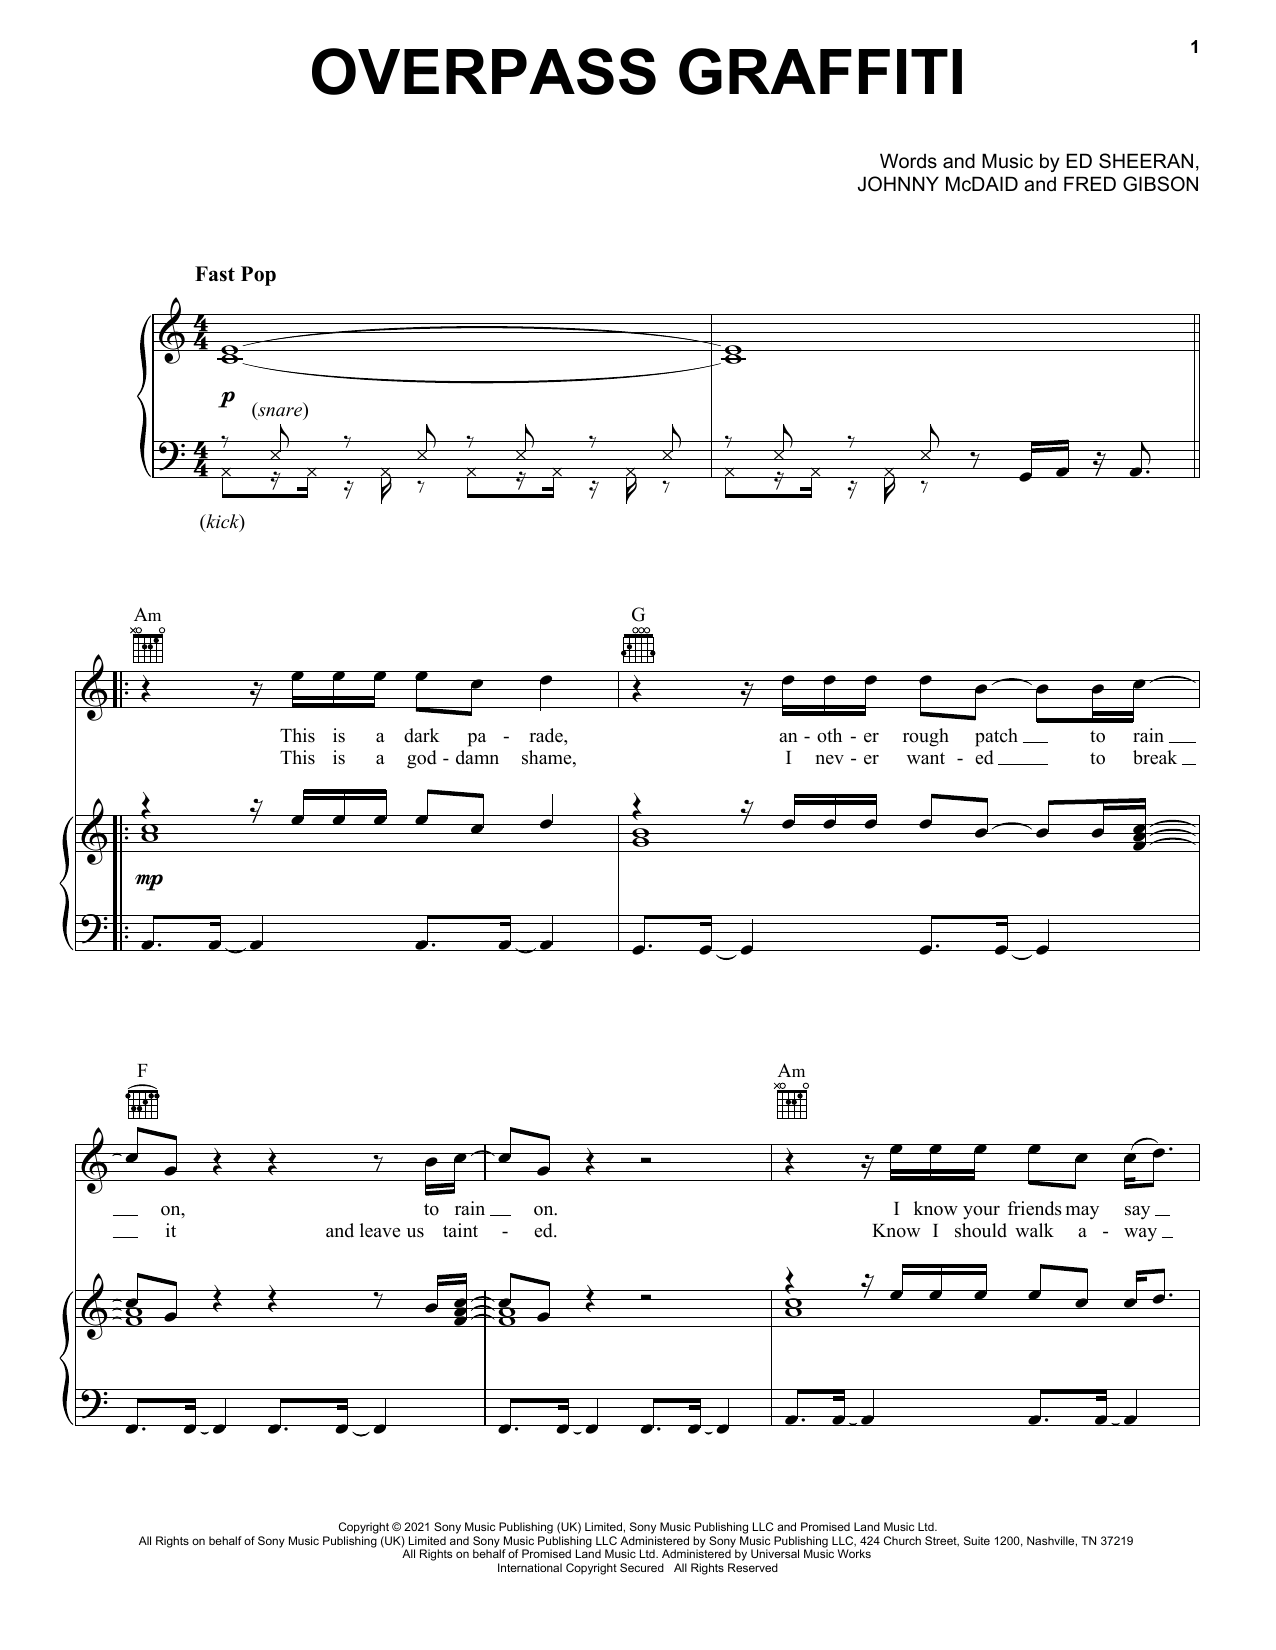 Ed Sheeran Overpass Graffiti Sheet Music Notes & Chords for Easy Piano - Download or Print PDF